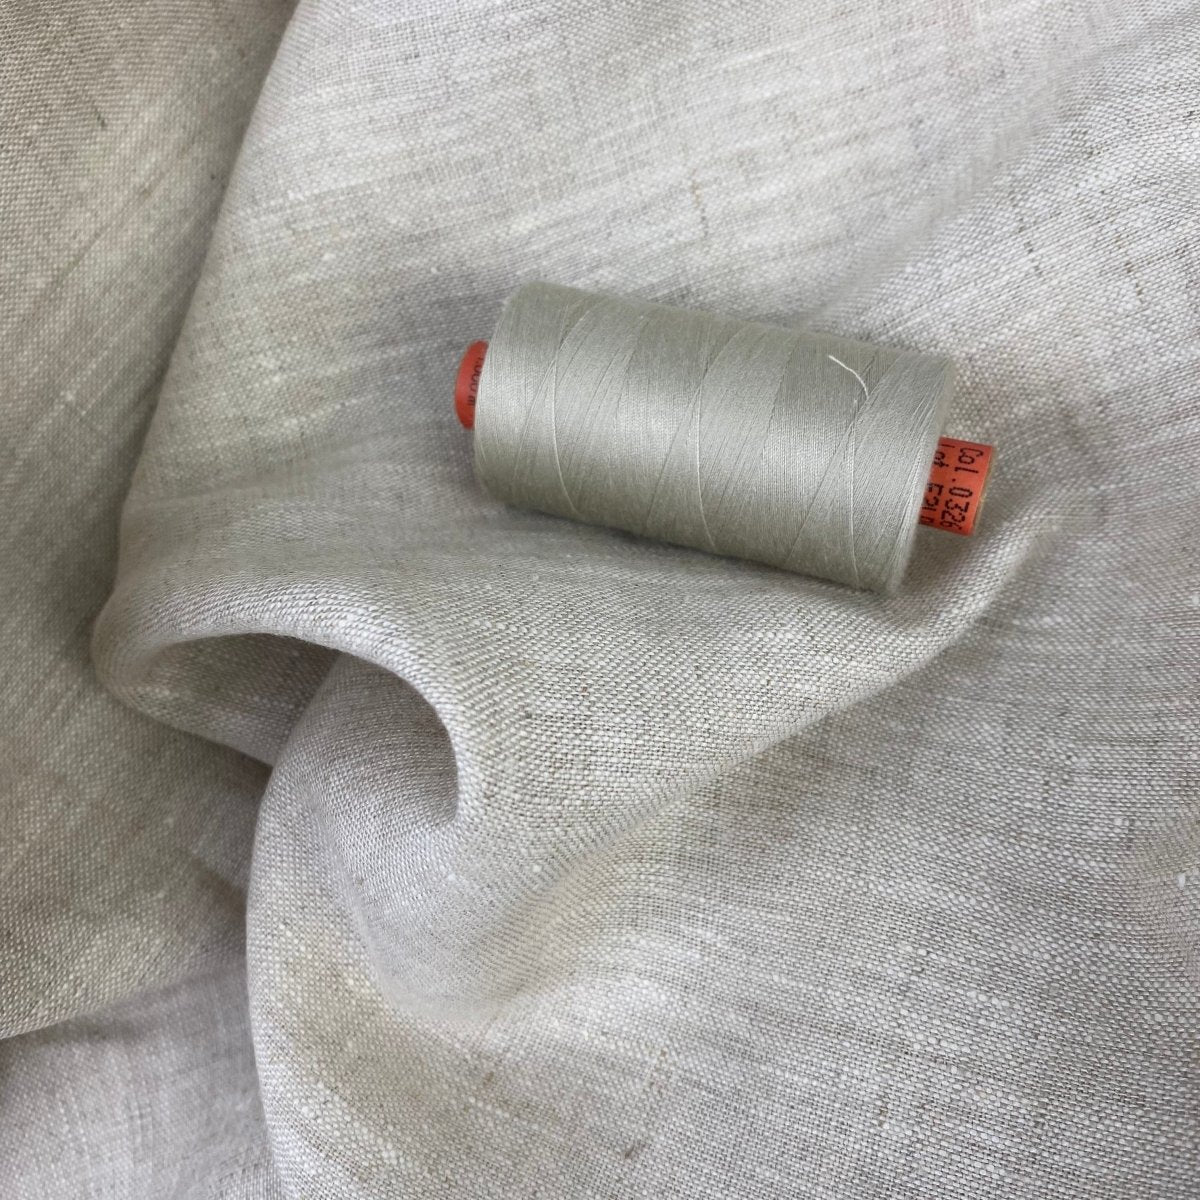 Rasant Thread - 1000m - Very Light Mocha Brown 0326 - Sewing Gem